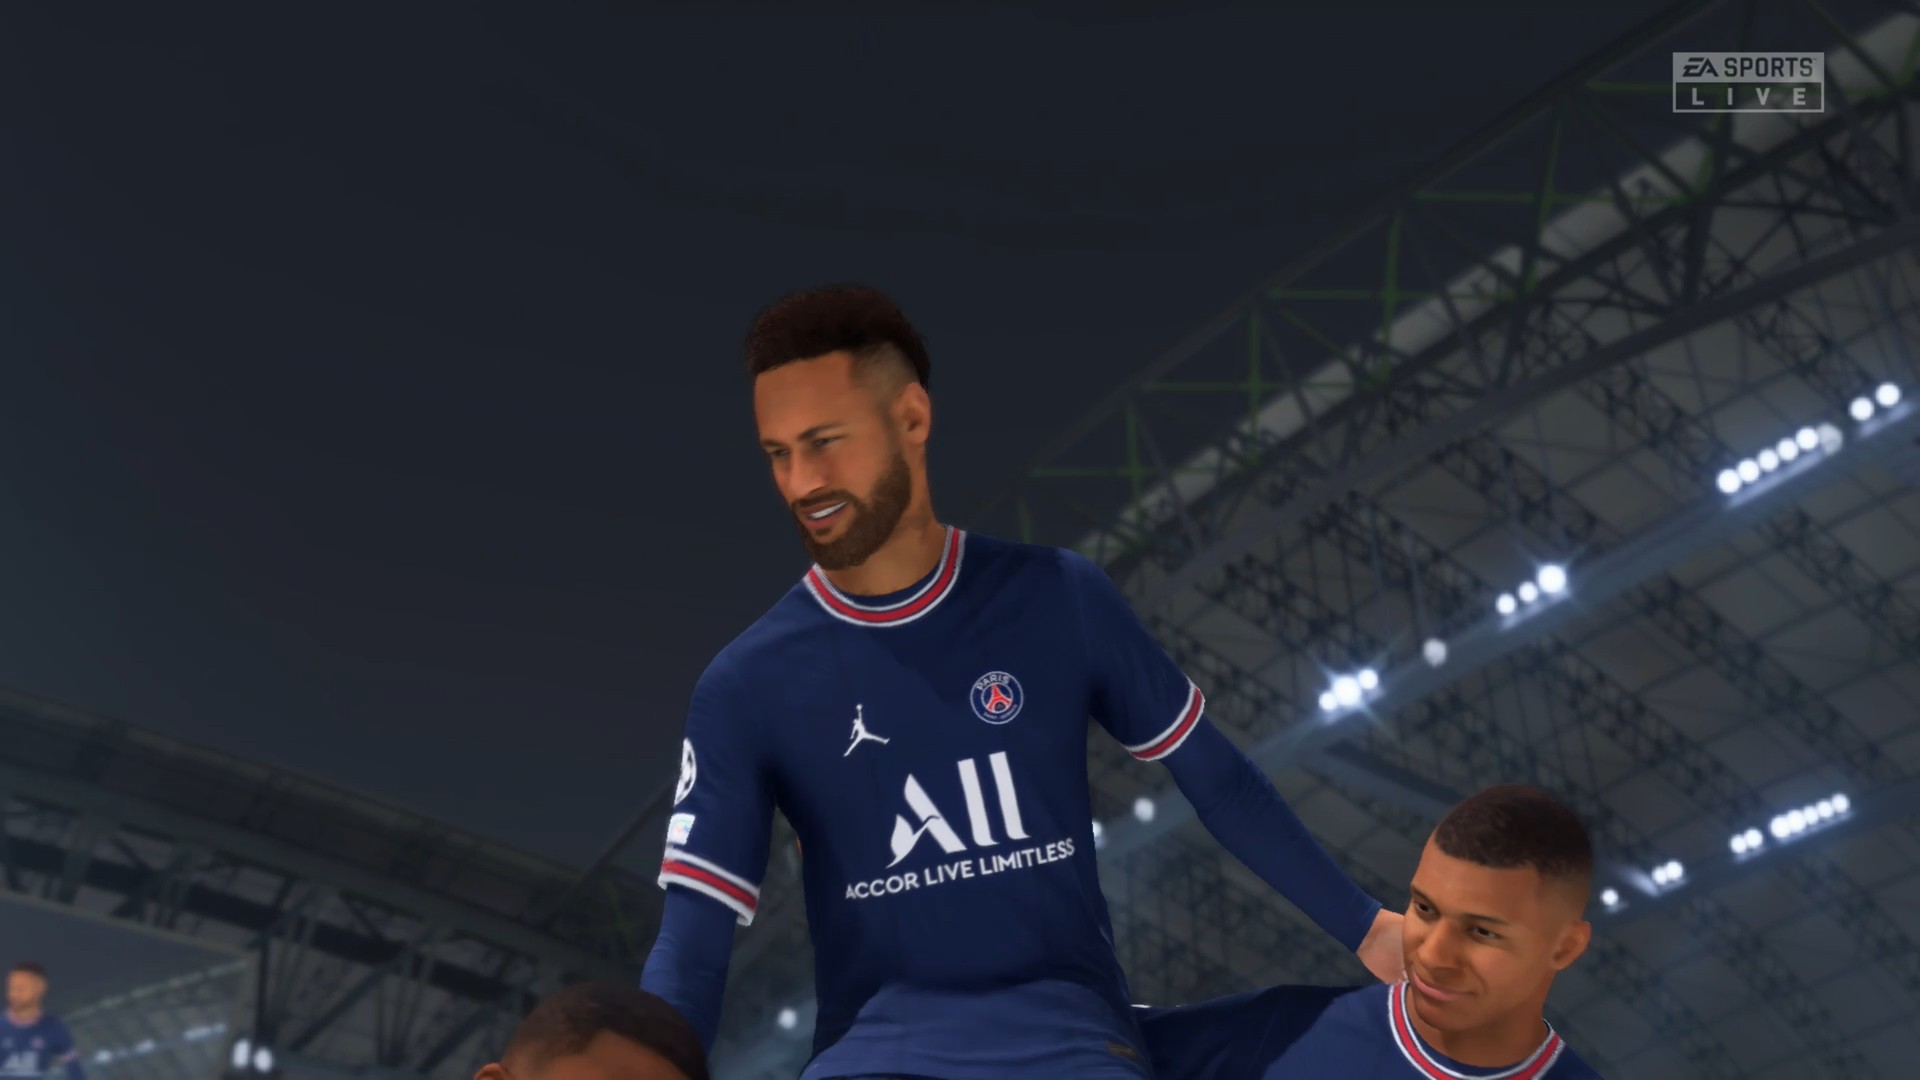 FIFA 23 - COMO JOGAR COPA COM AMIGOS 